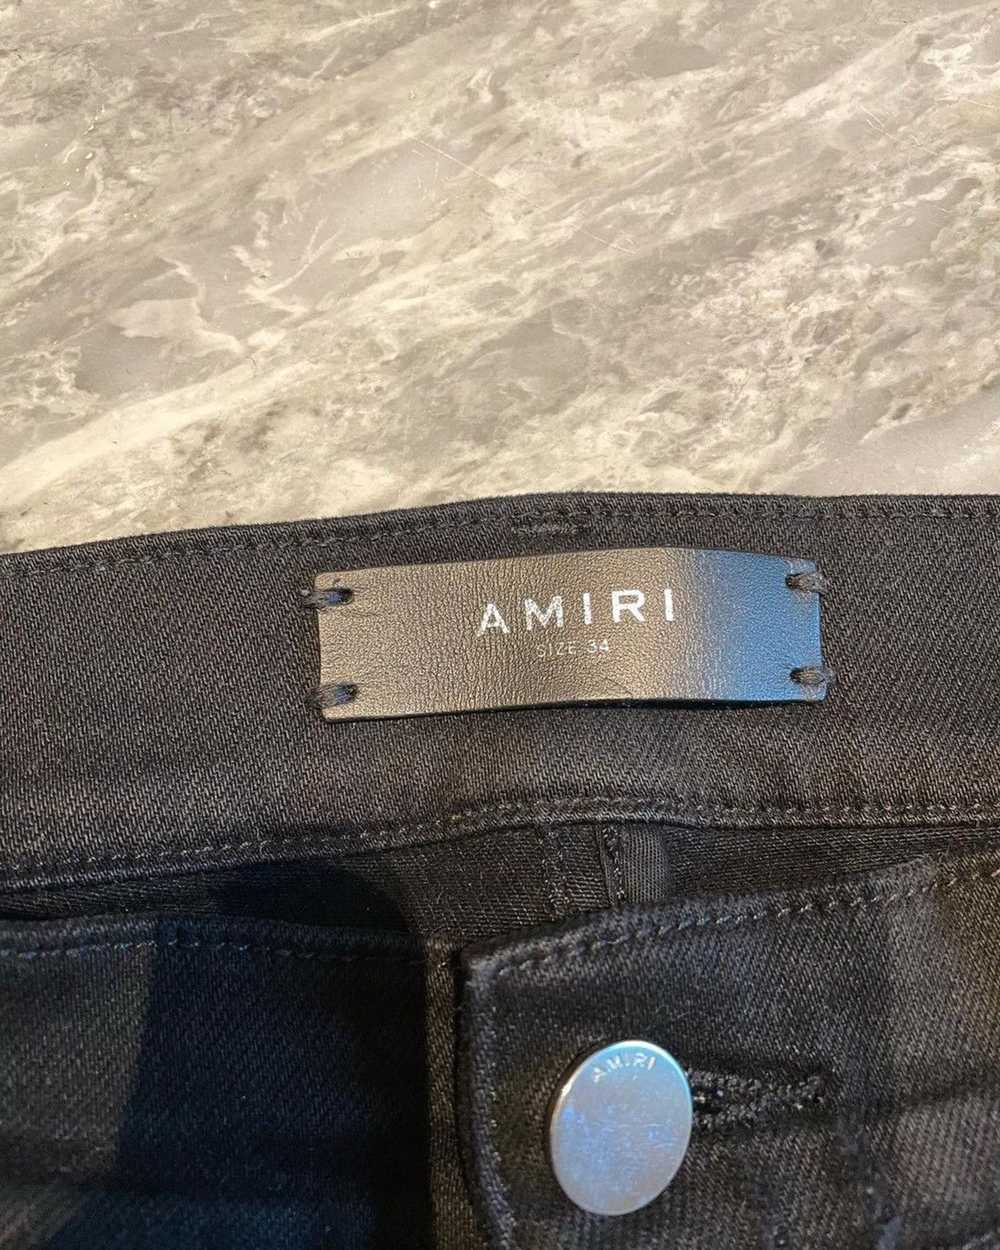 Amiri Amiri Black Cotton MX1 Jeans - image 4